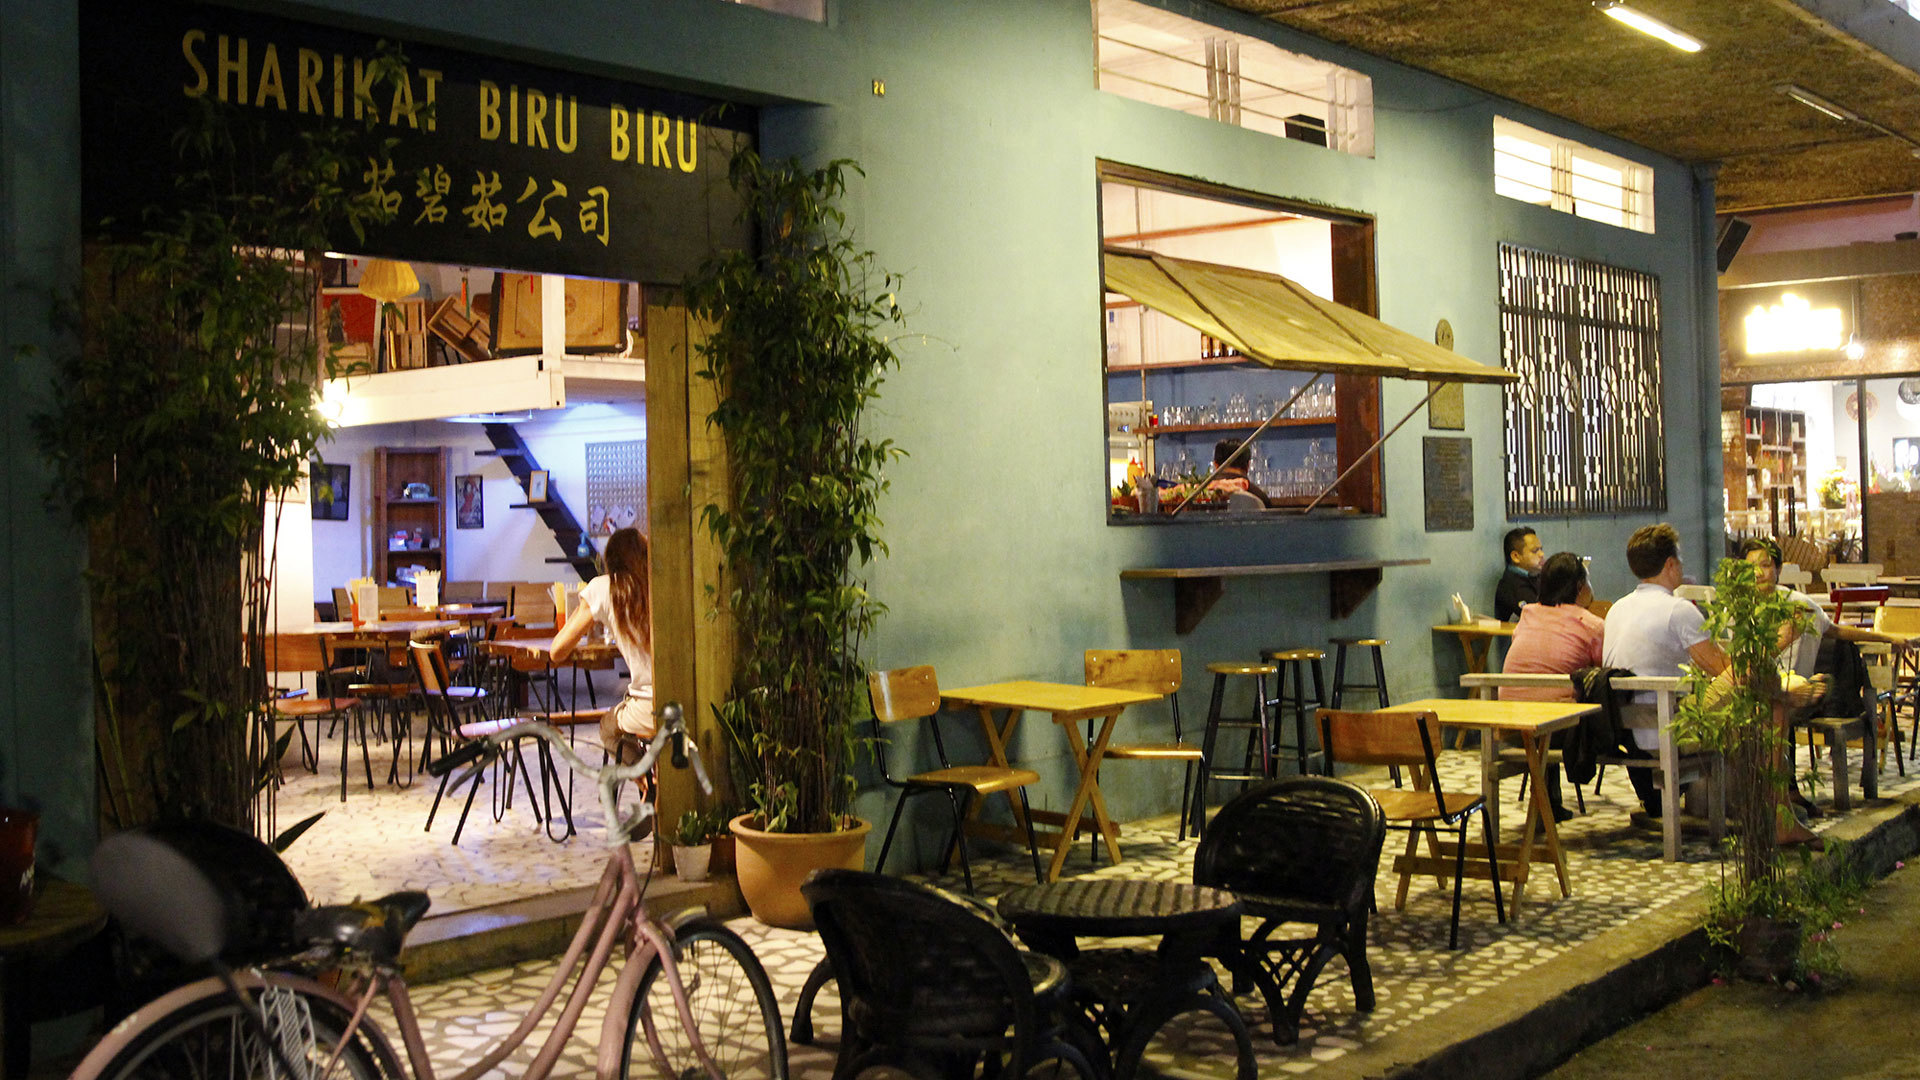 Biru Biru Cafe & Bar